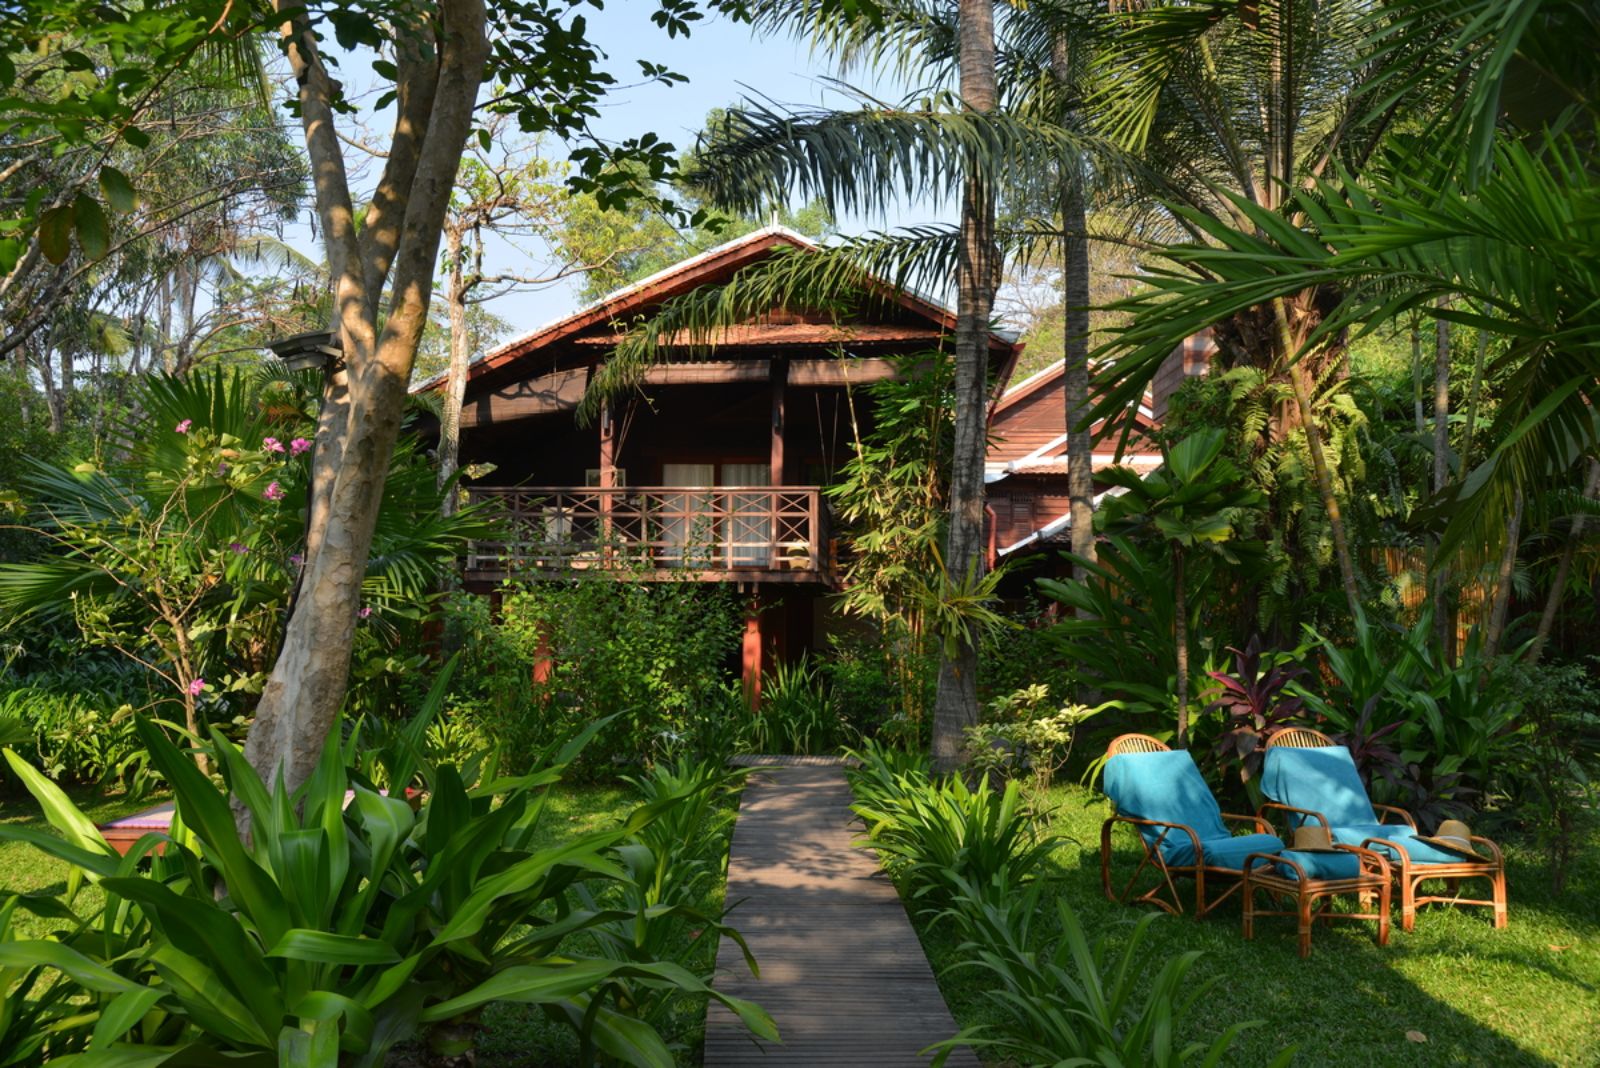 Exterior of The Maison villa at Maison Polanka in Cambodia's Siem Reap